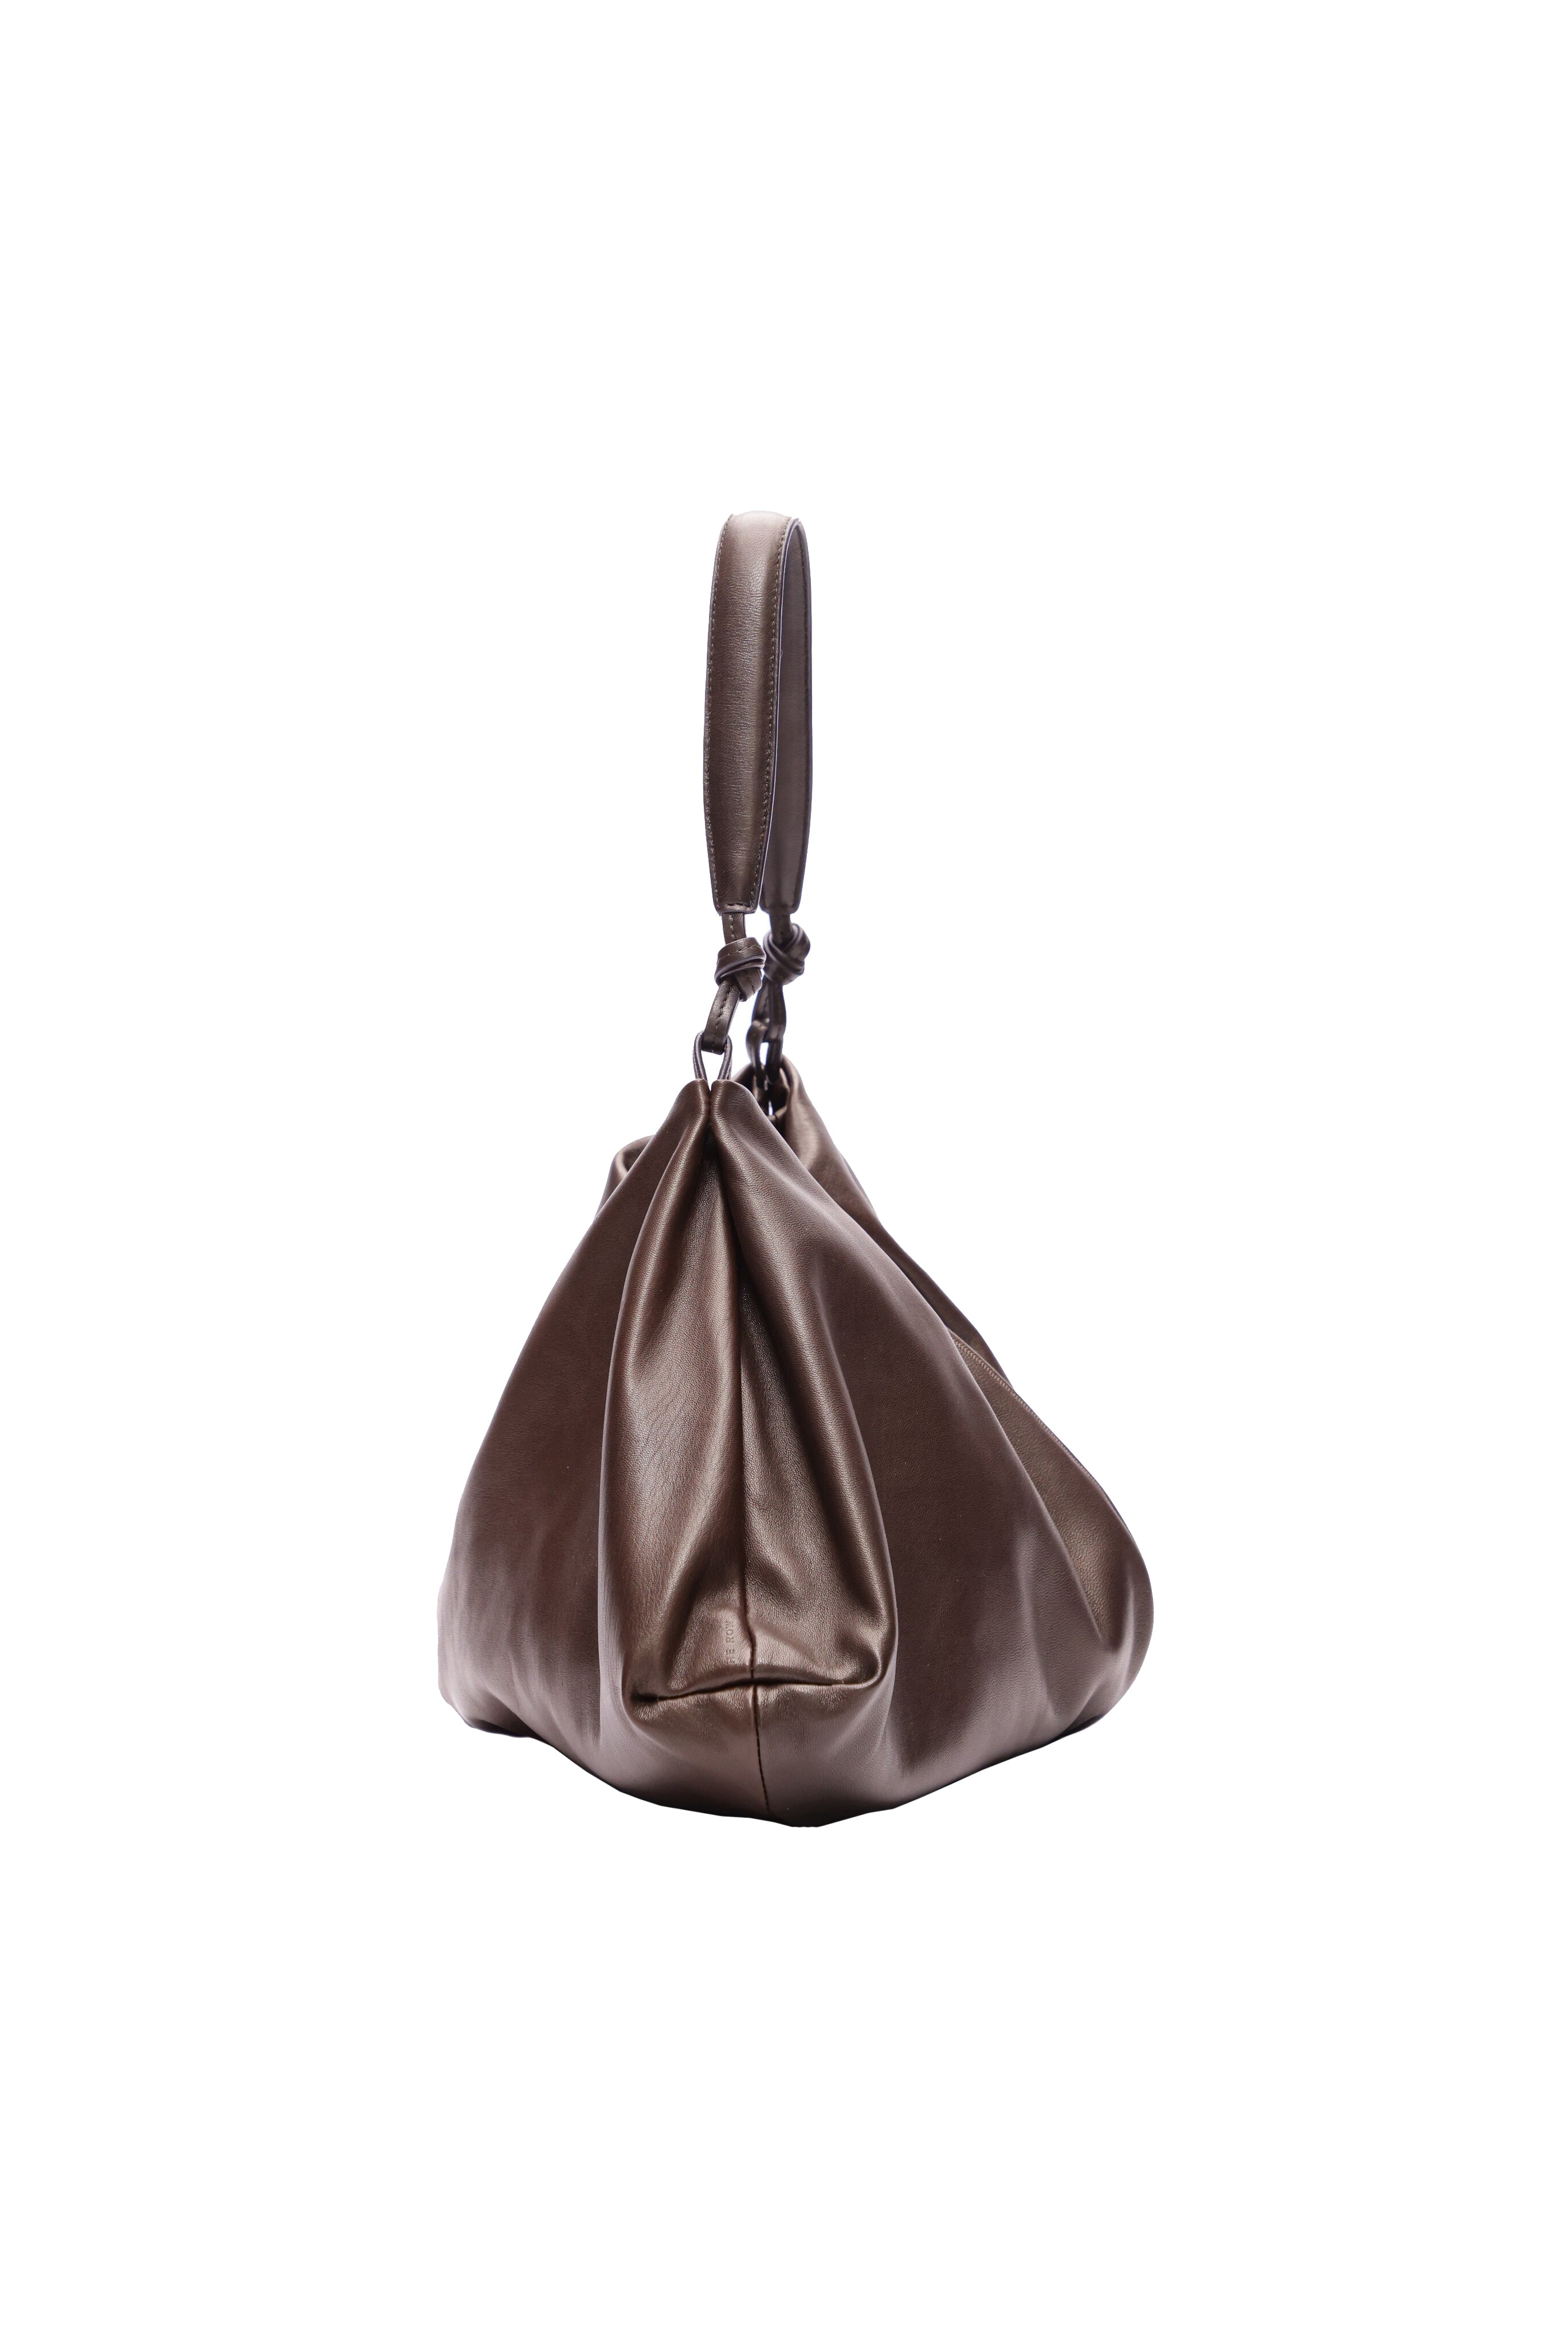 THE ROW Samia Leather Bag